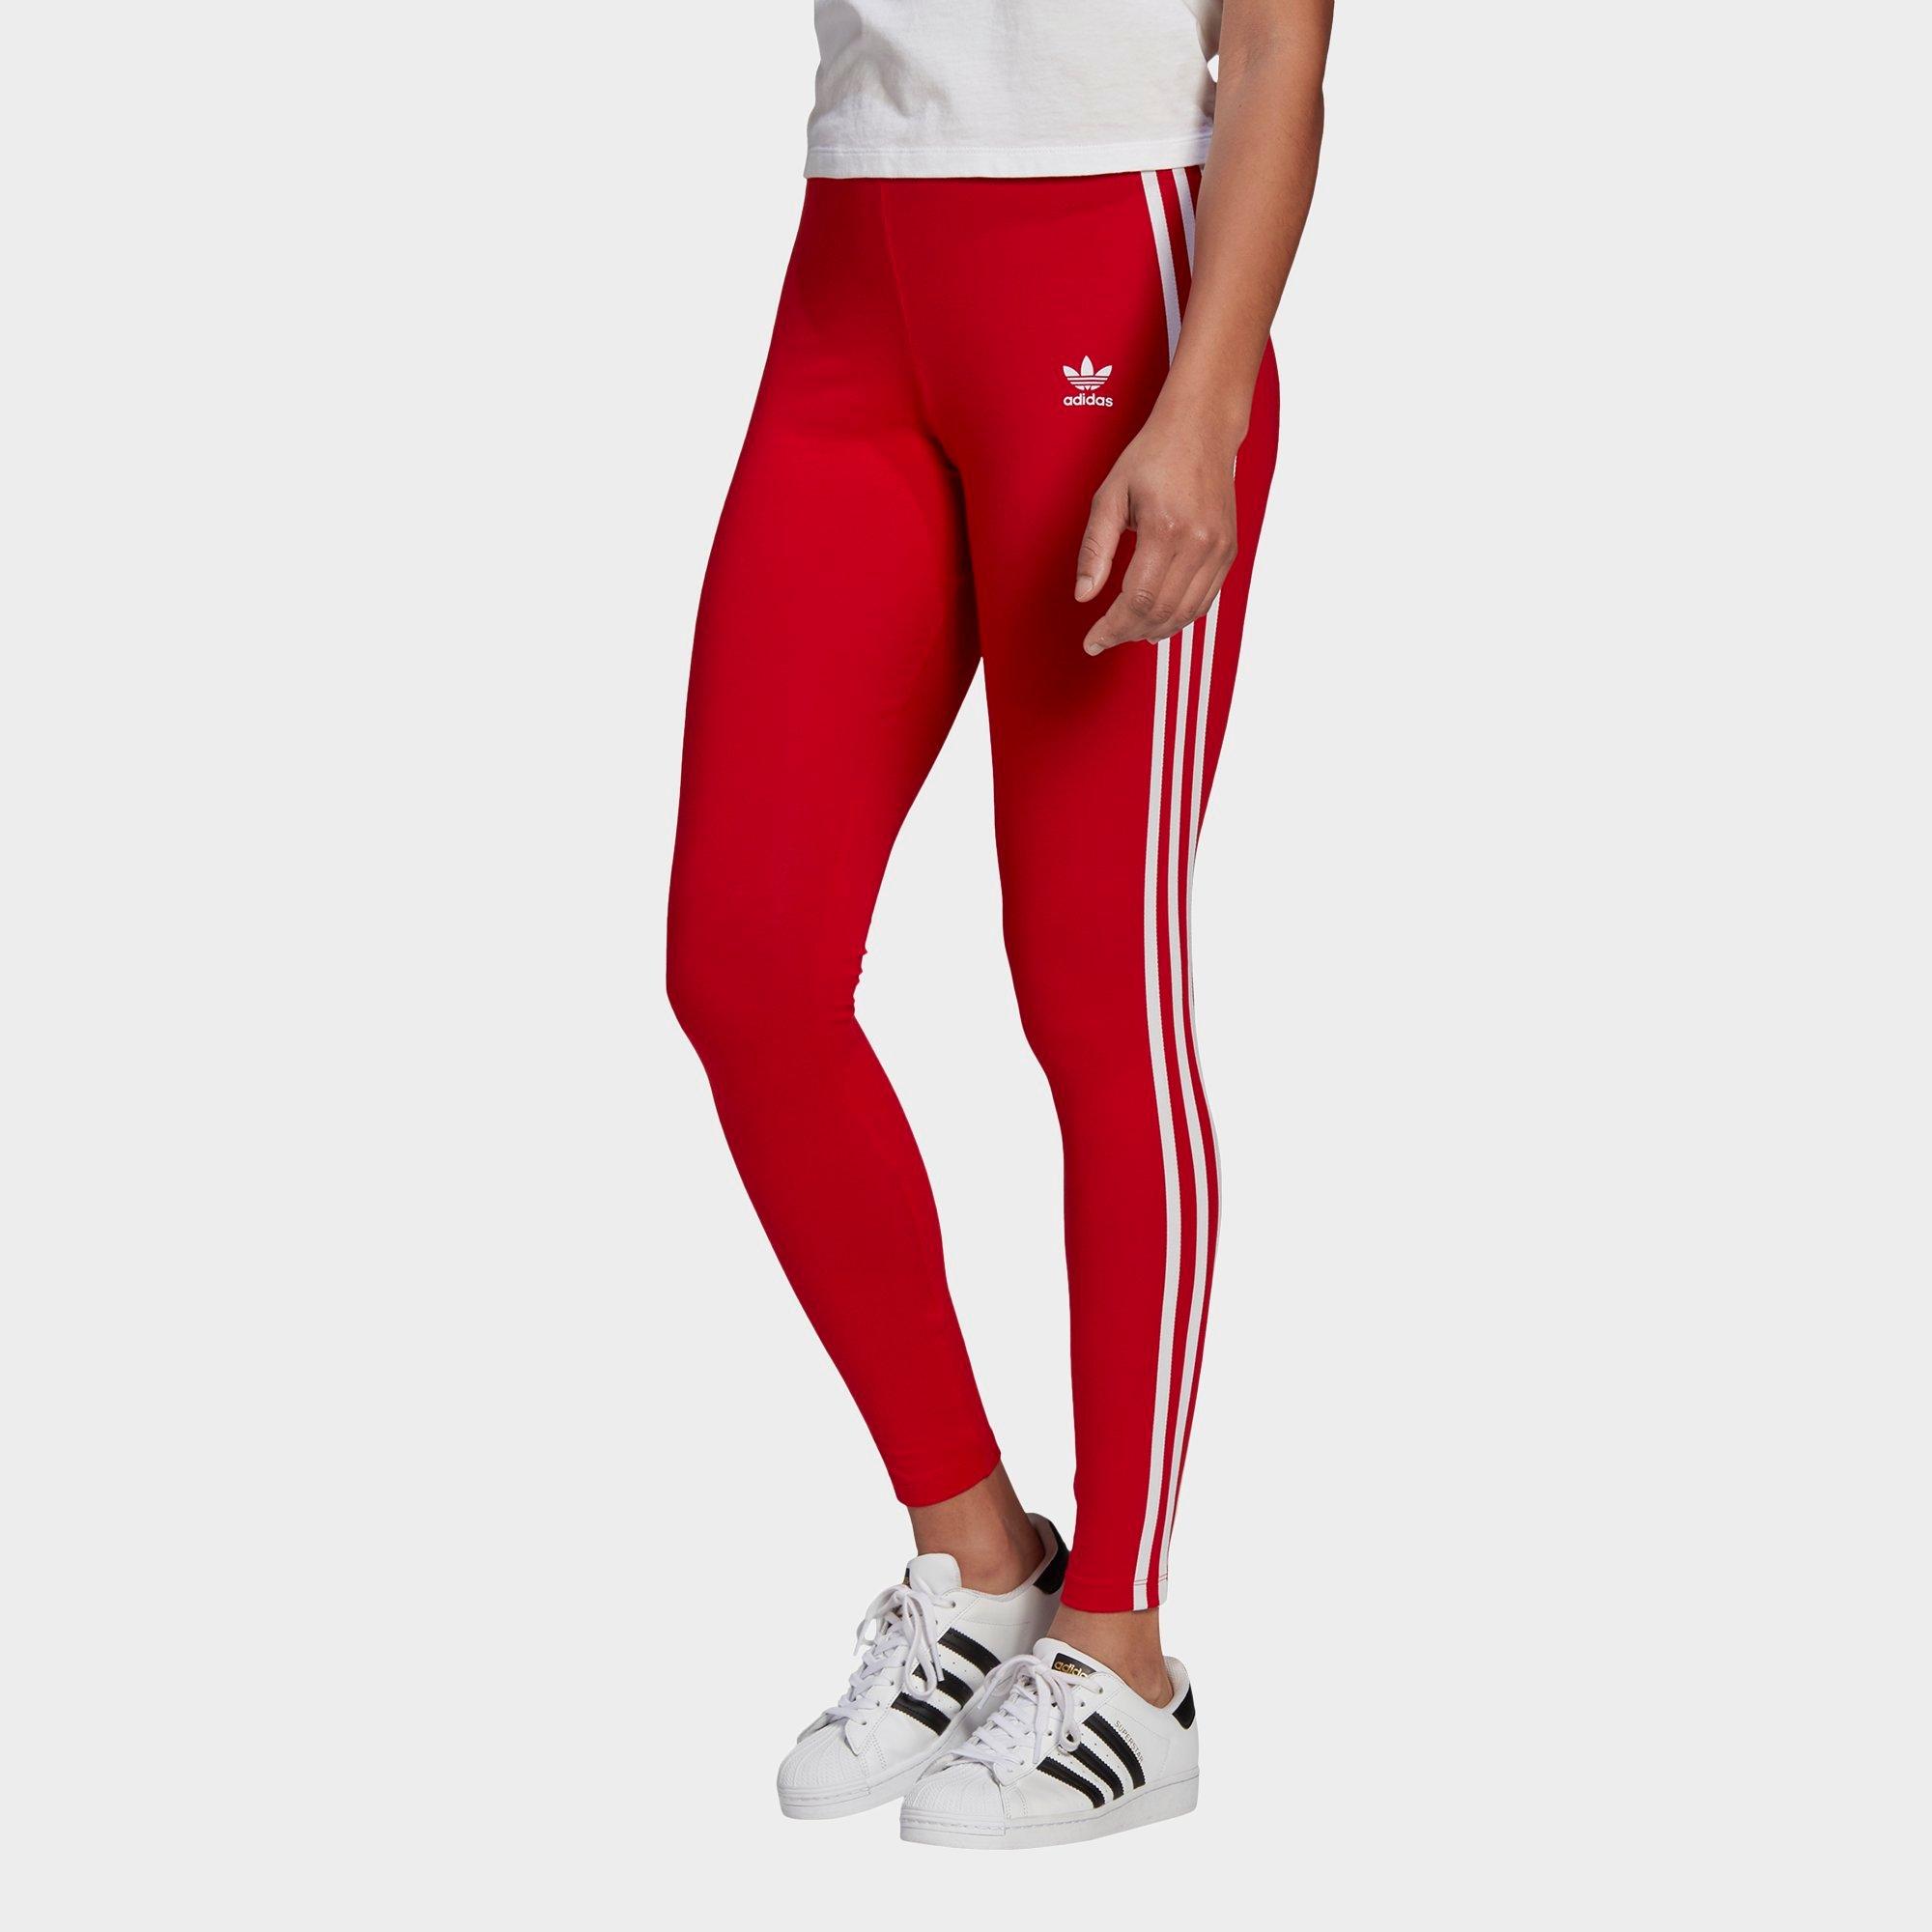 jd sports adidas trefoil leggings